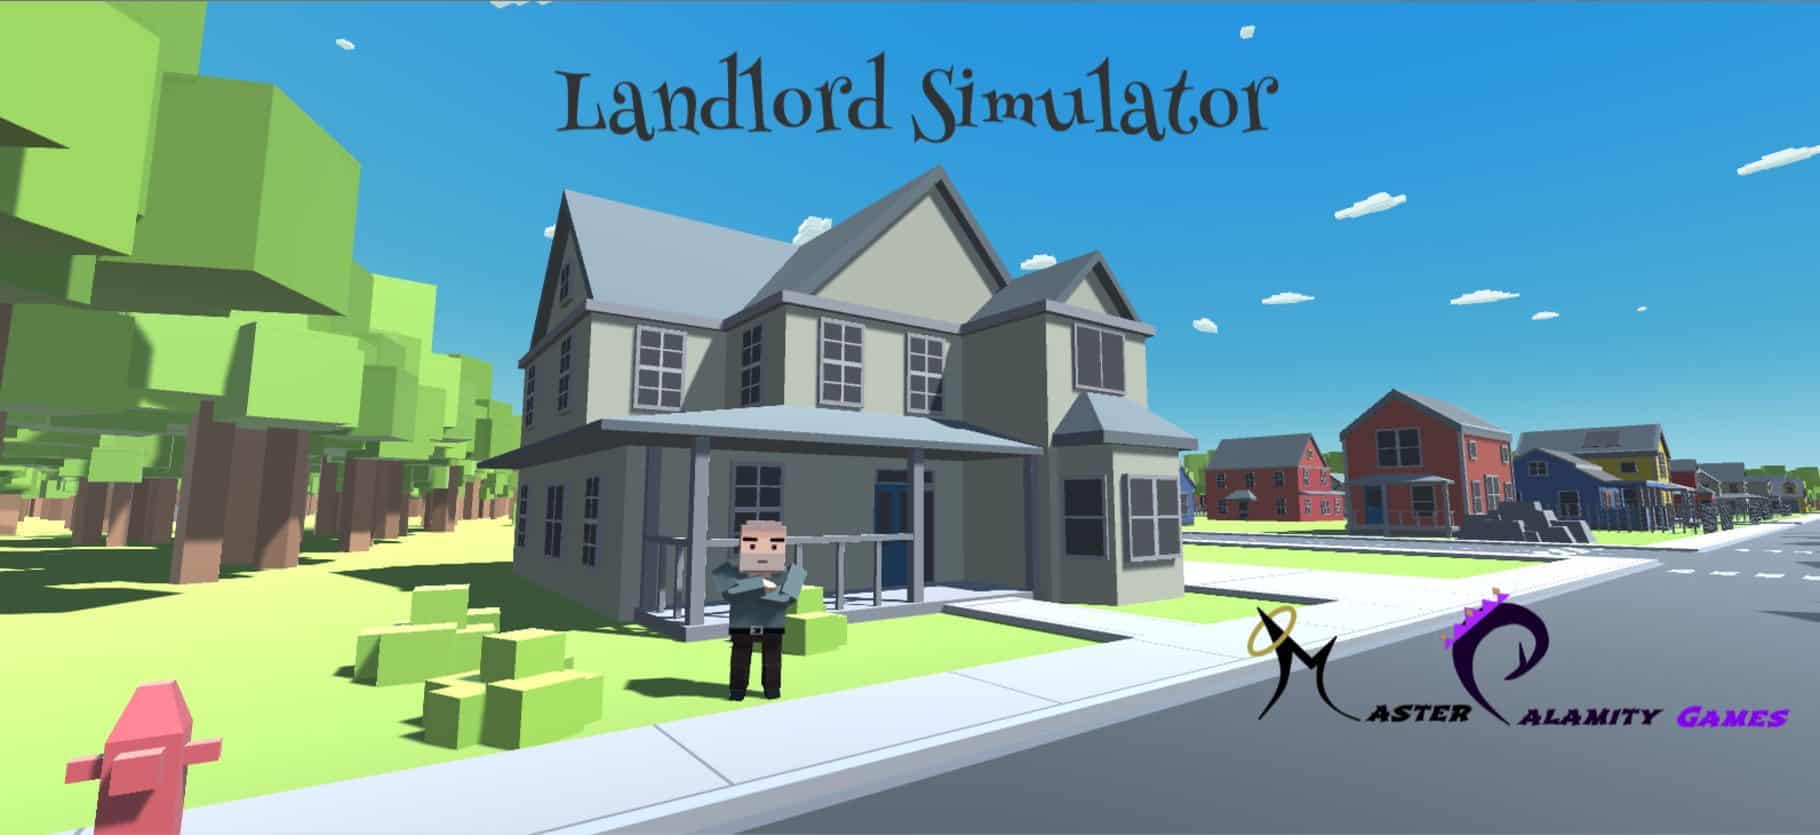 Landlord Simulator